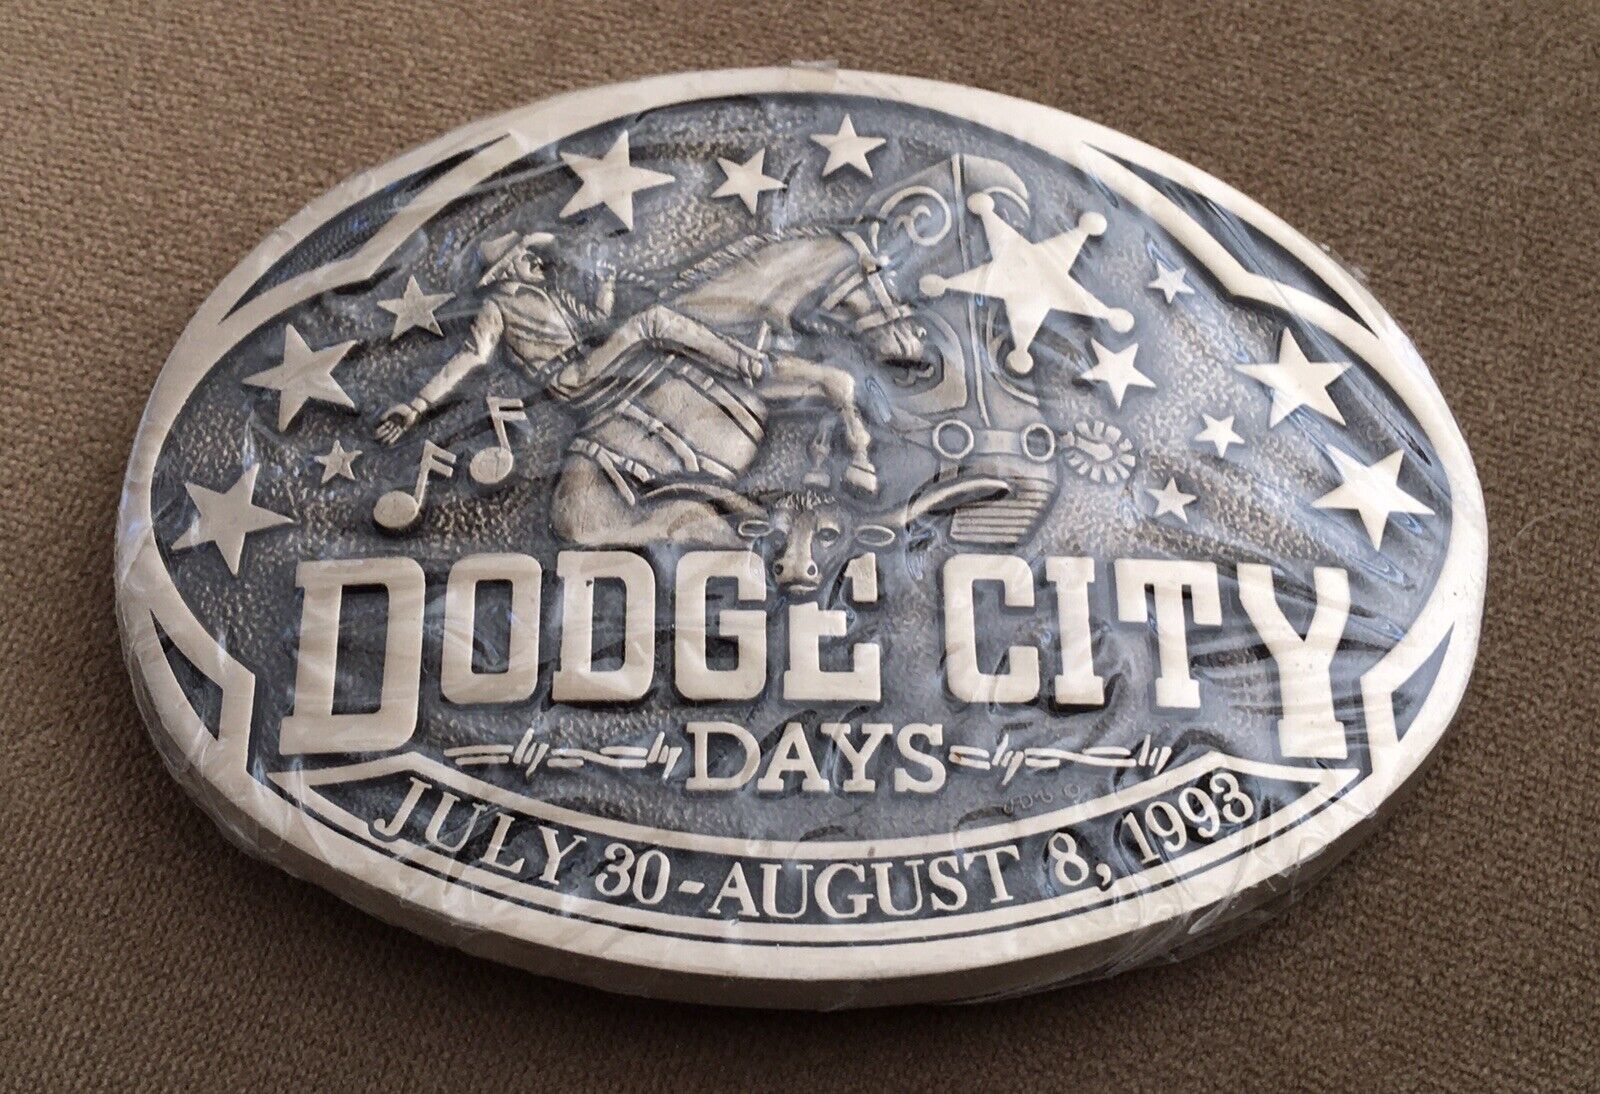 Vintage NOS NIB 1993 Dodge City Days Rodeo Ltd Edition ADM Trophy Belt Buckle